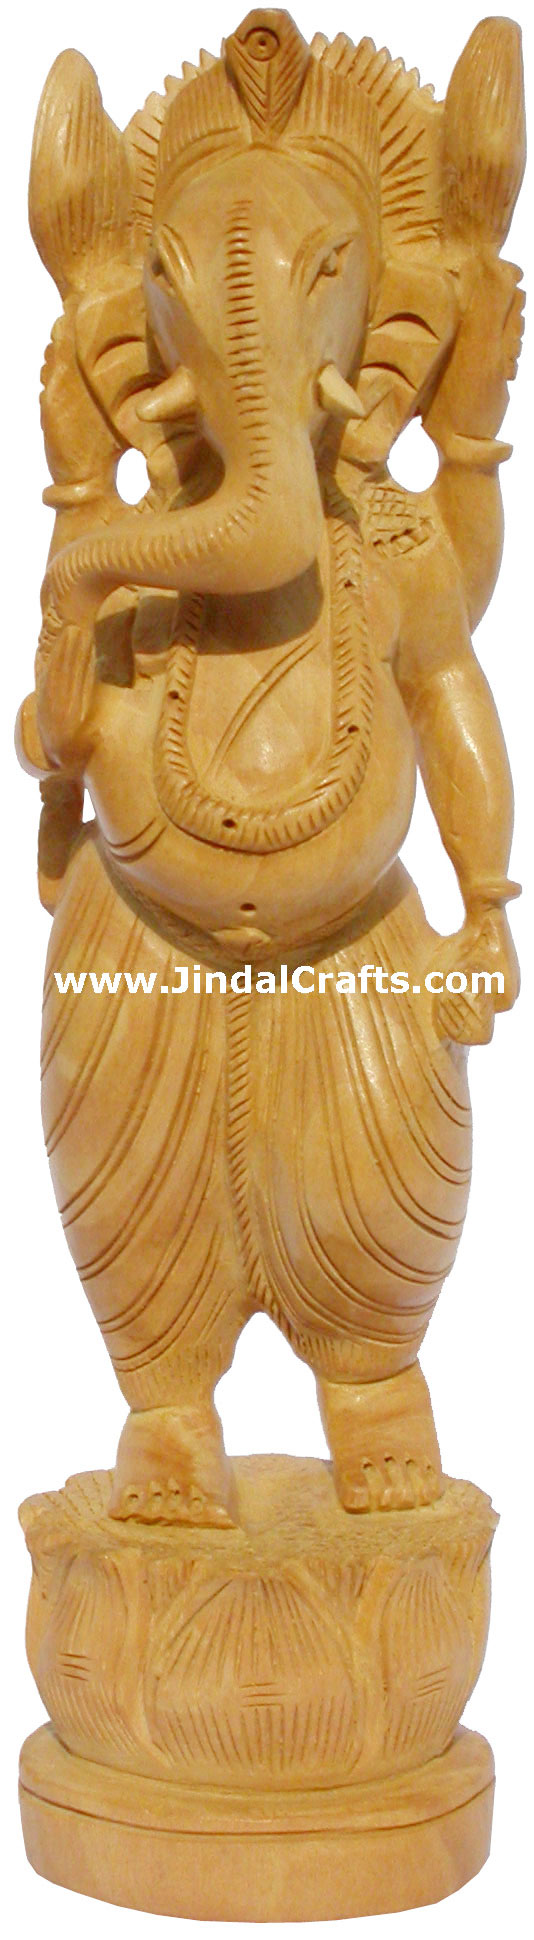 Handmade Ganesha Wooden Sculpture Statuette Indian Hindu Idol Carving Art Crafts